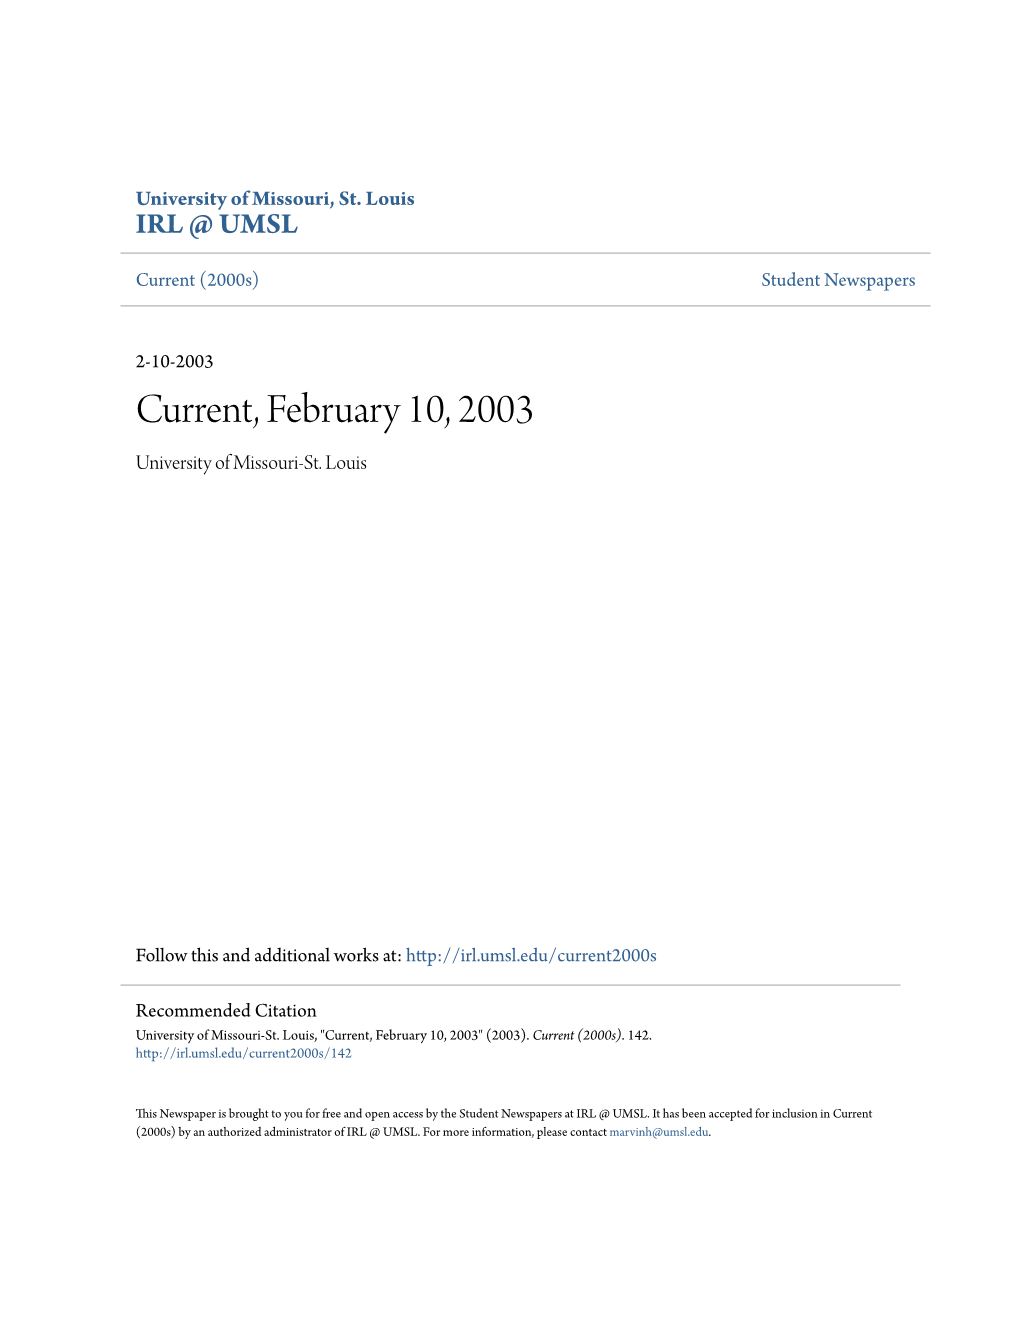 Current, February 10, 2003 University of Missouri-St